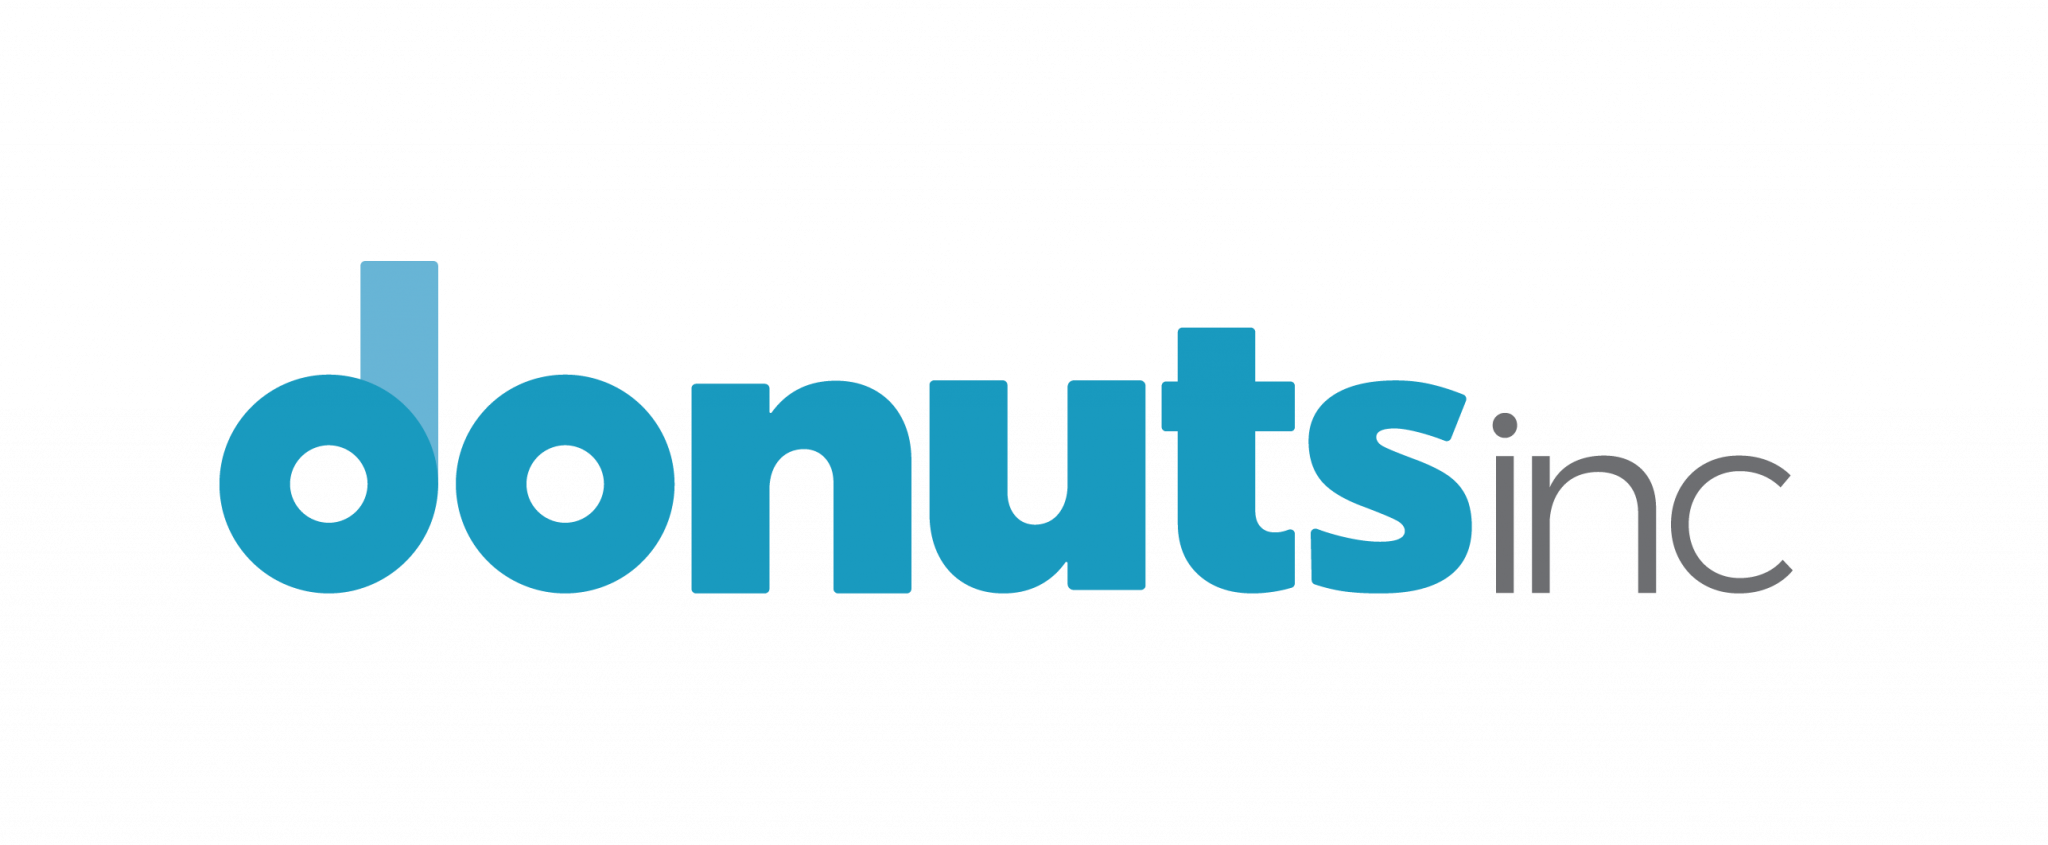 Donuts Inc